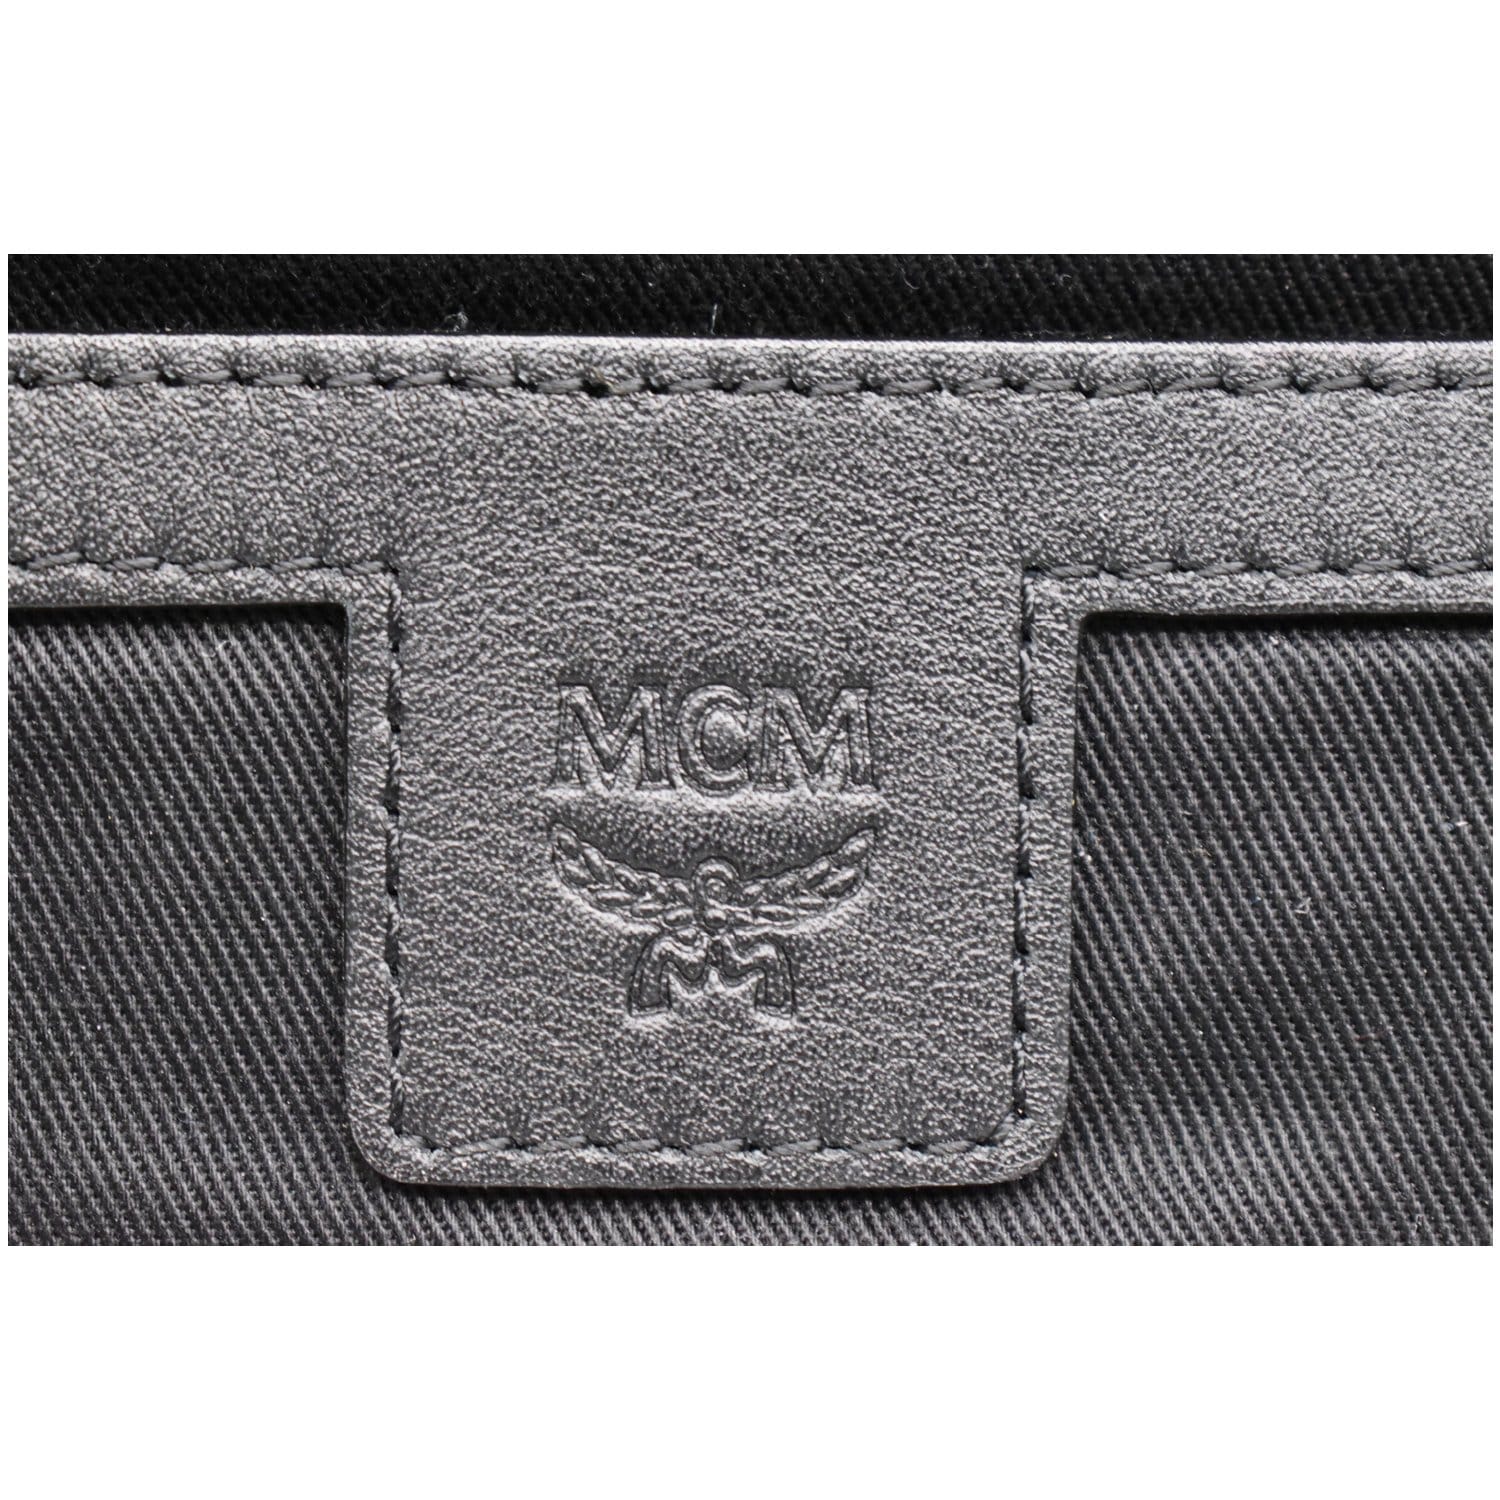 Authentic Mcm Monogram Coated Visetos Messenger Crossbody Metallic Bag